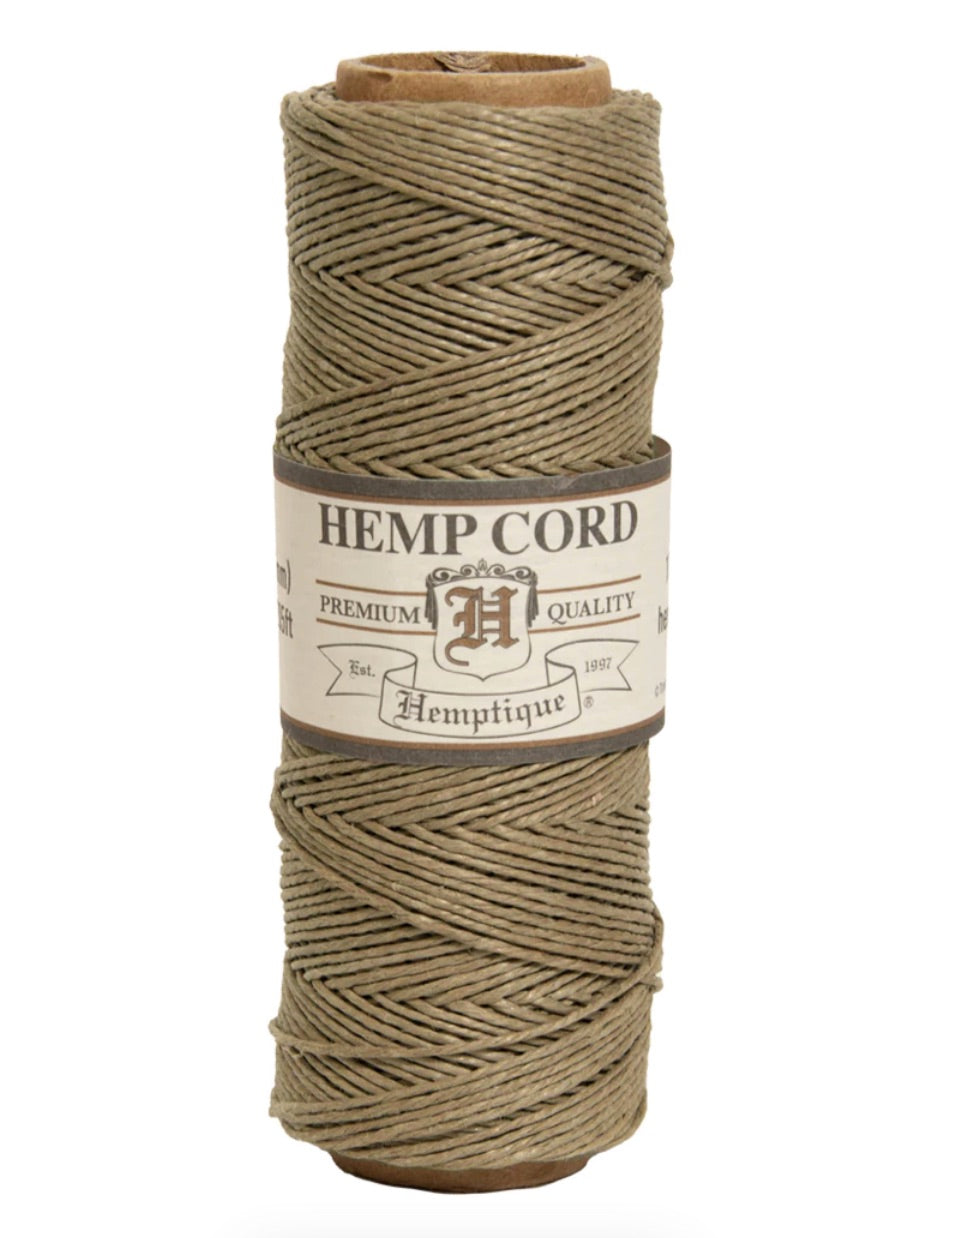 Hemptique Hemp Cord Macrame Spool #10 - Dusty Olive